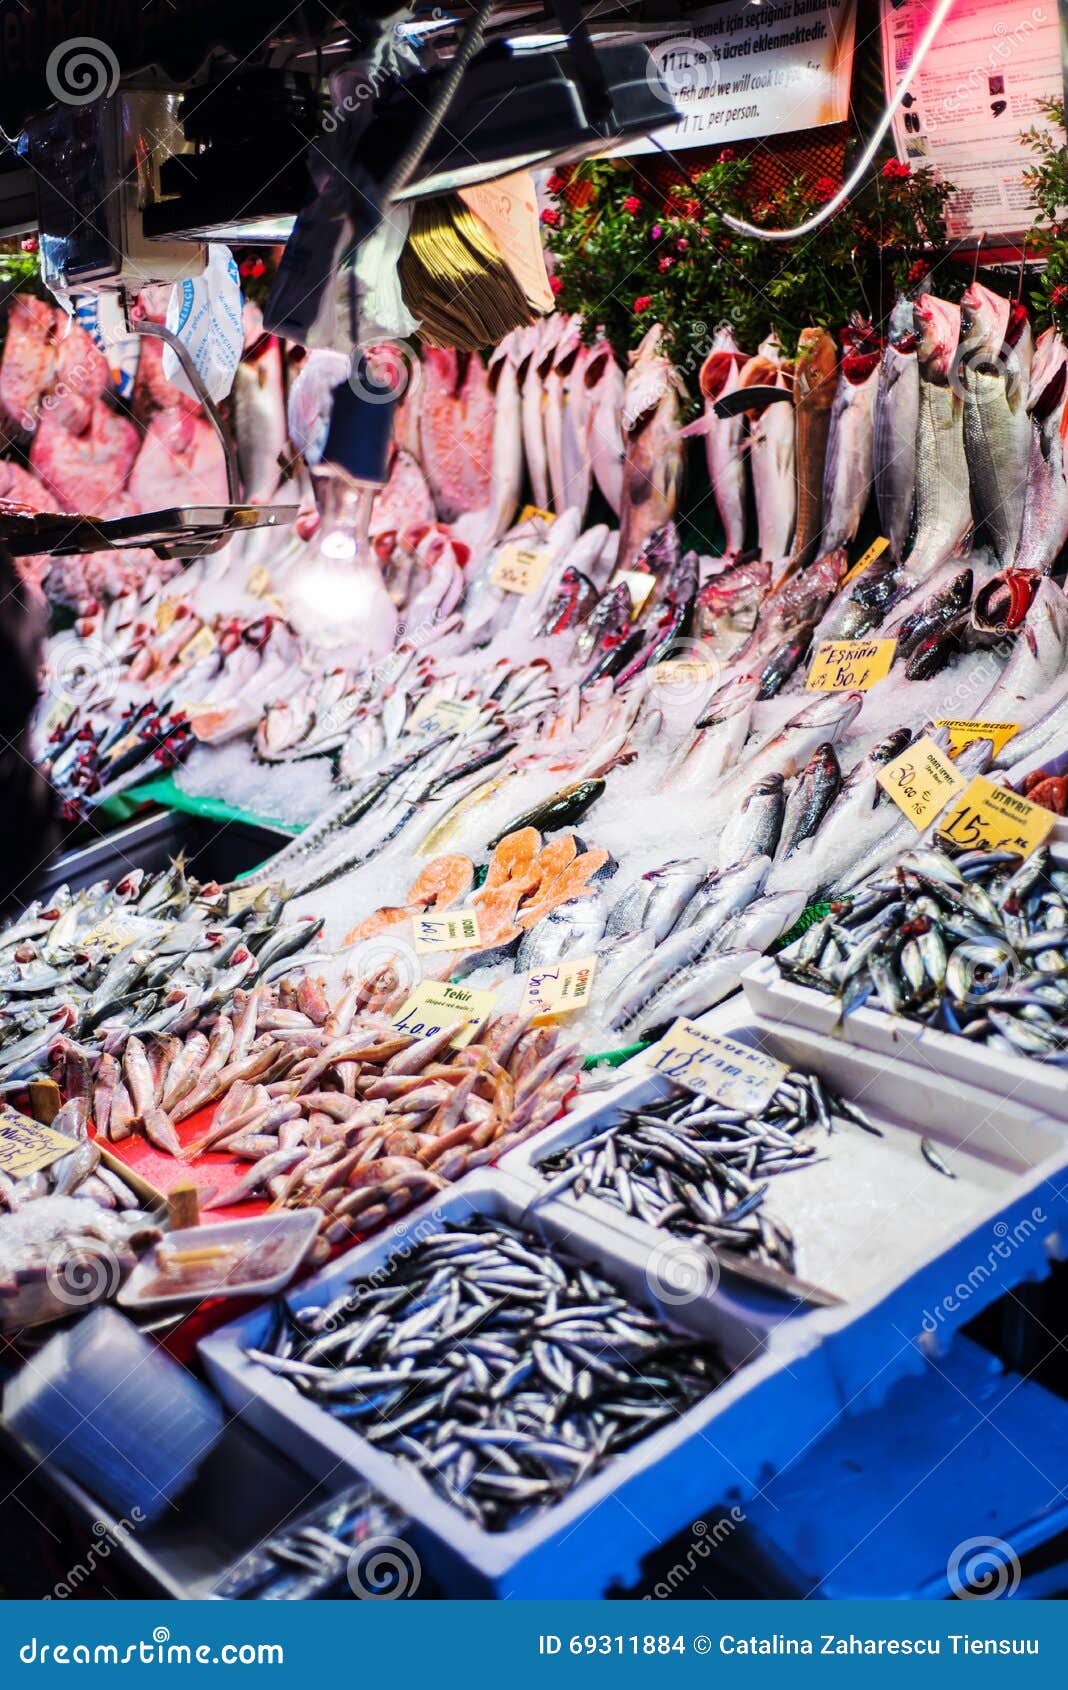 fish and shellfish street shop in kadikoy area, istanbul